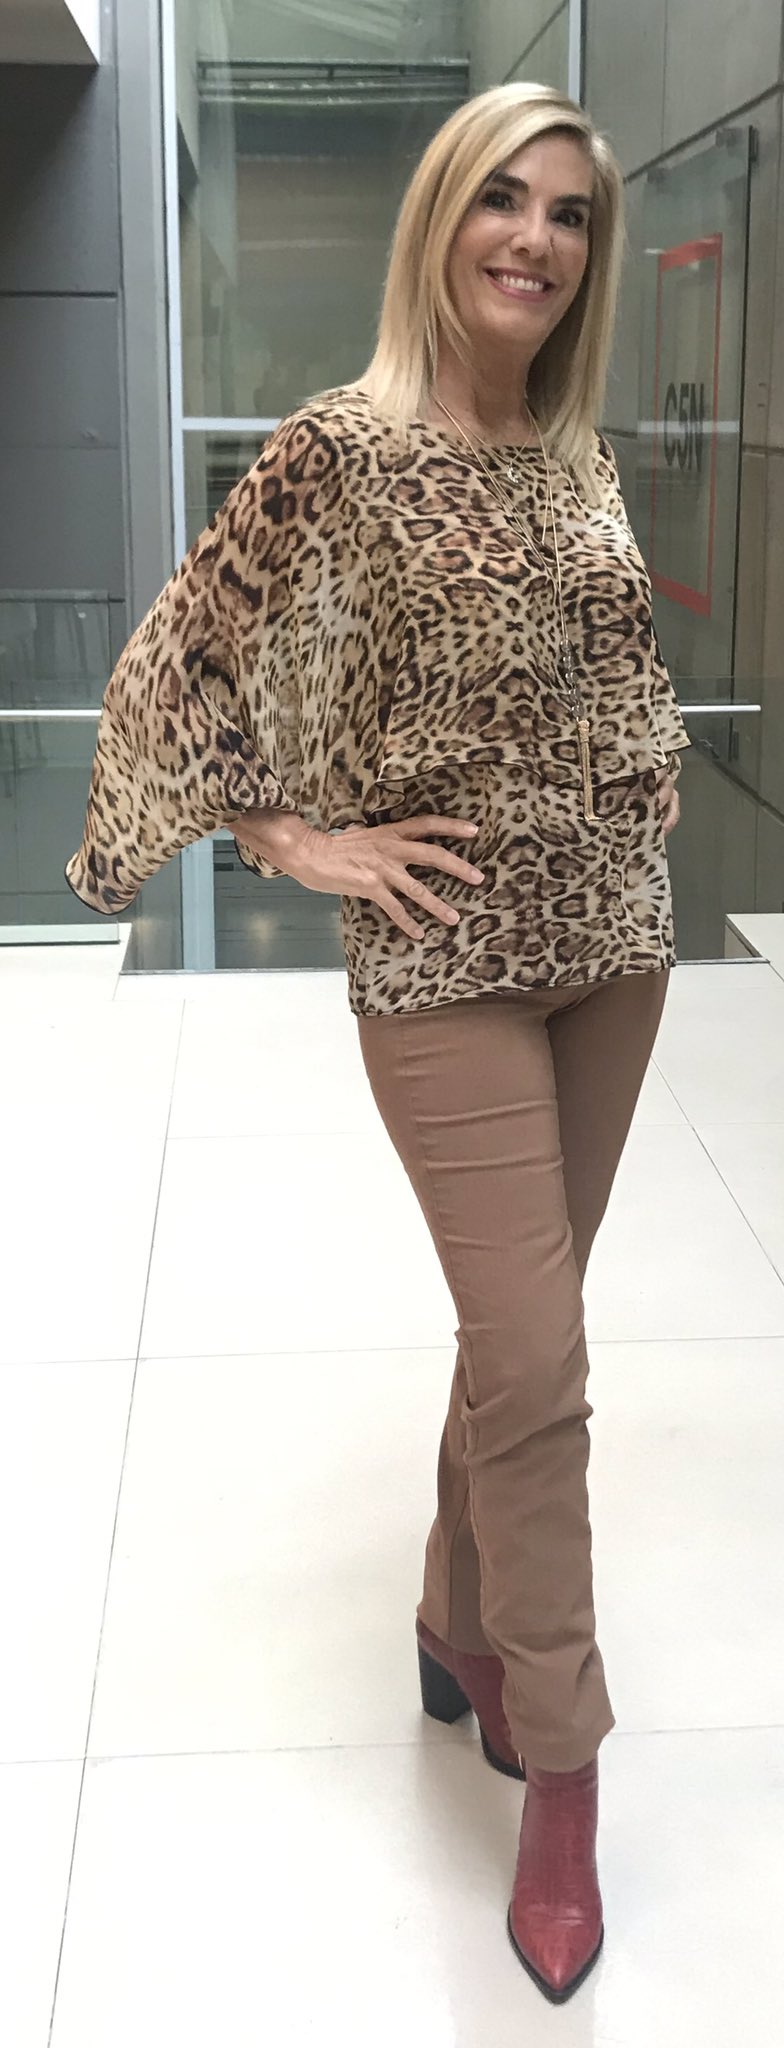 María Belén Aramburu on Twitter: "Look @RafaelGarofaloM #pantalones #ajustados #stretch #beige #marrones #blusa #animal #print #moda #fashion https://t.co/ts6dWe4A9g" / Twitter